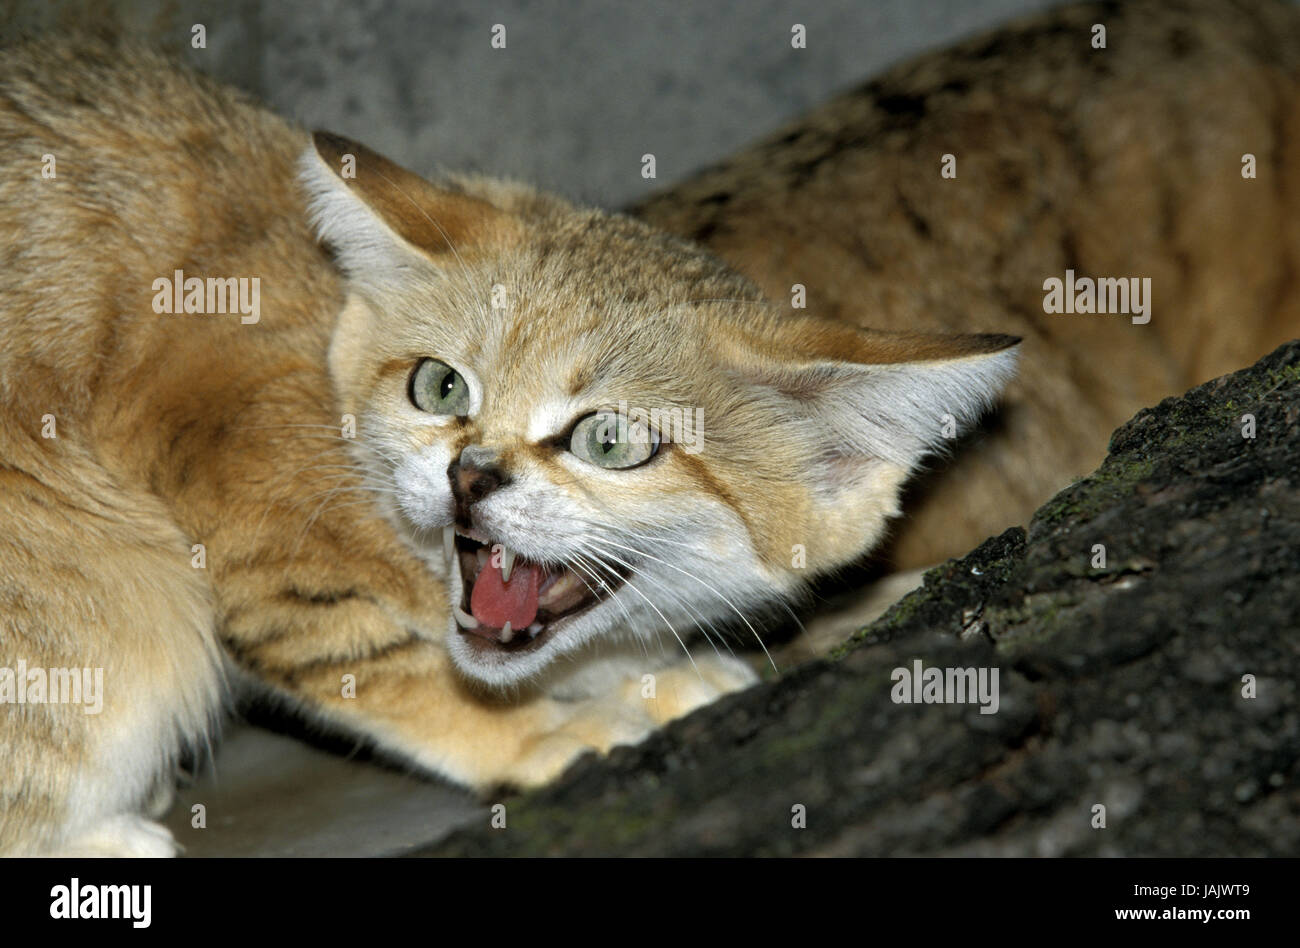 Sand cat,Felis margarita,hiss, Stock Photo